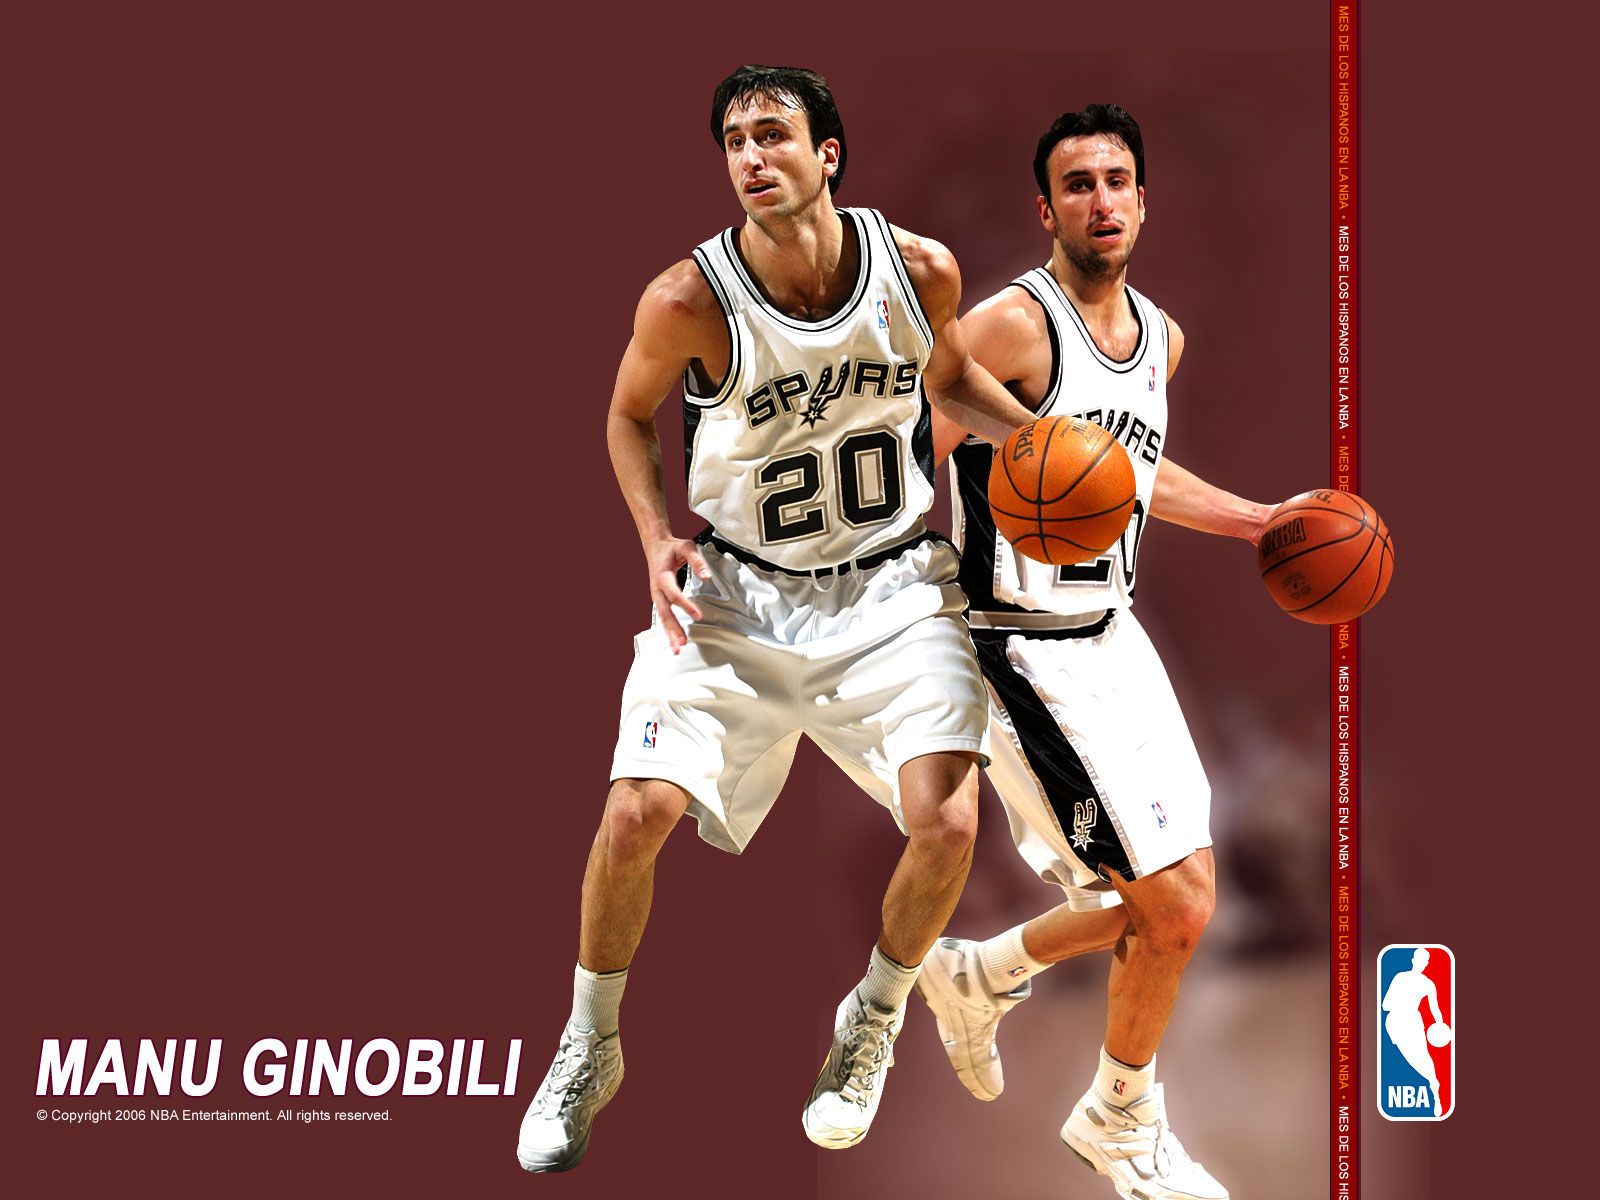 Manu Ginobili Wallpaper | Basketball Wallpapers at ...